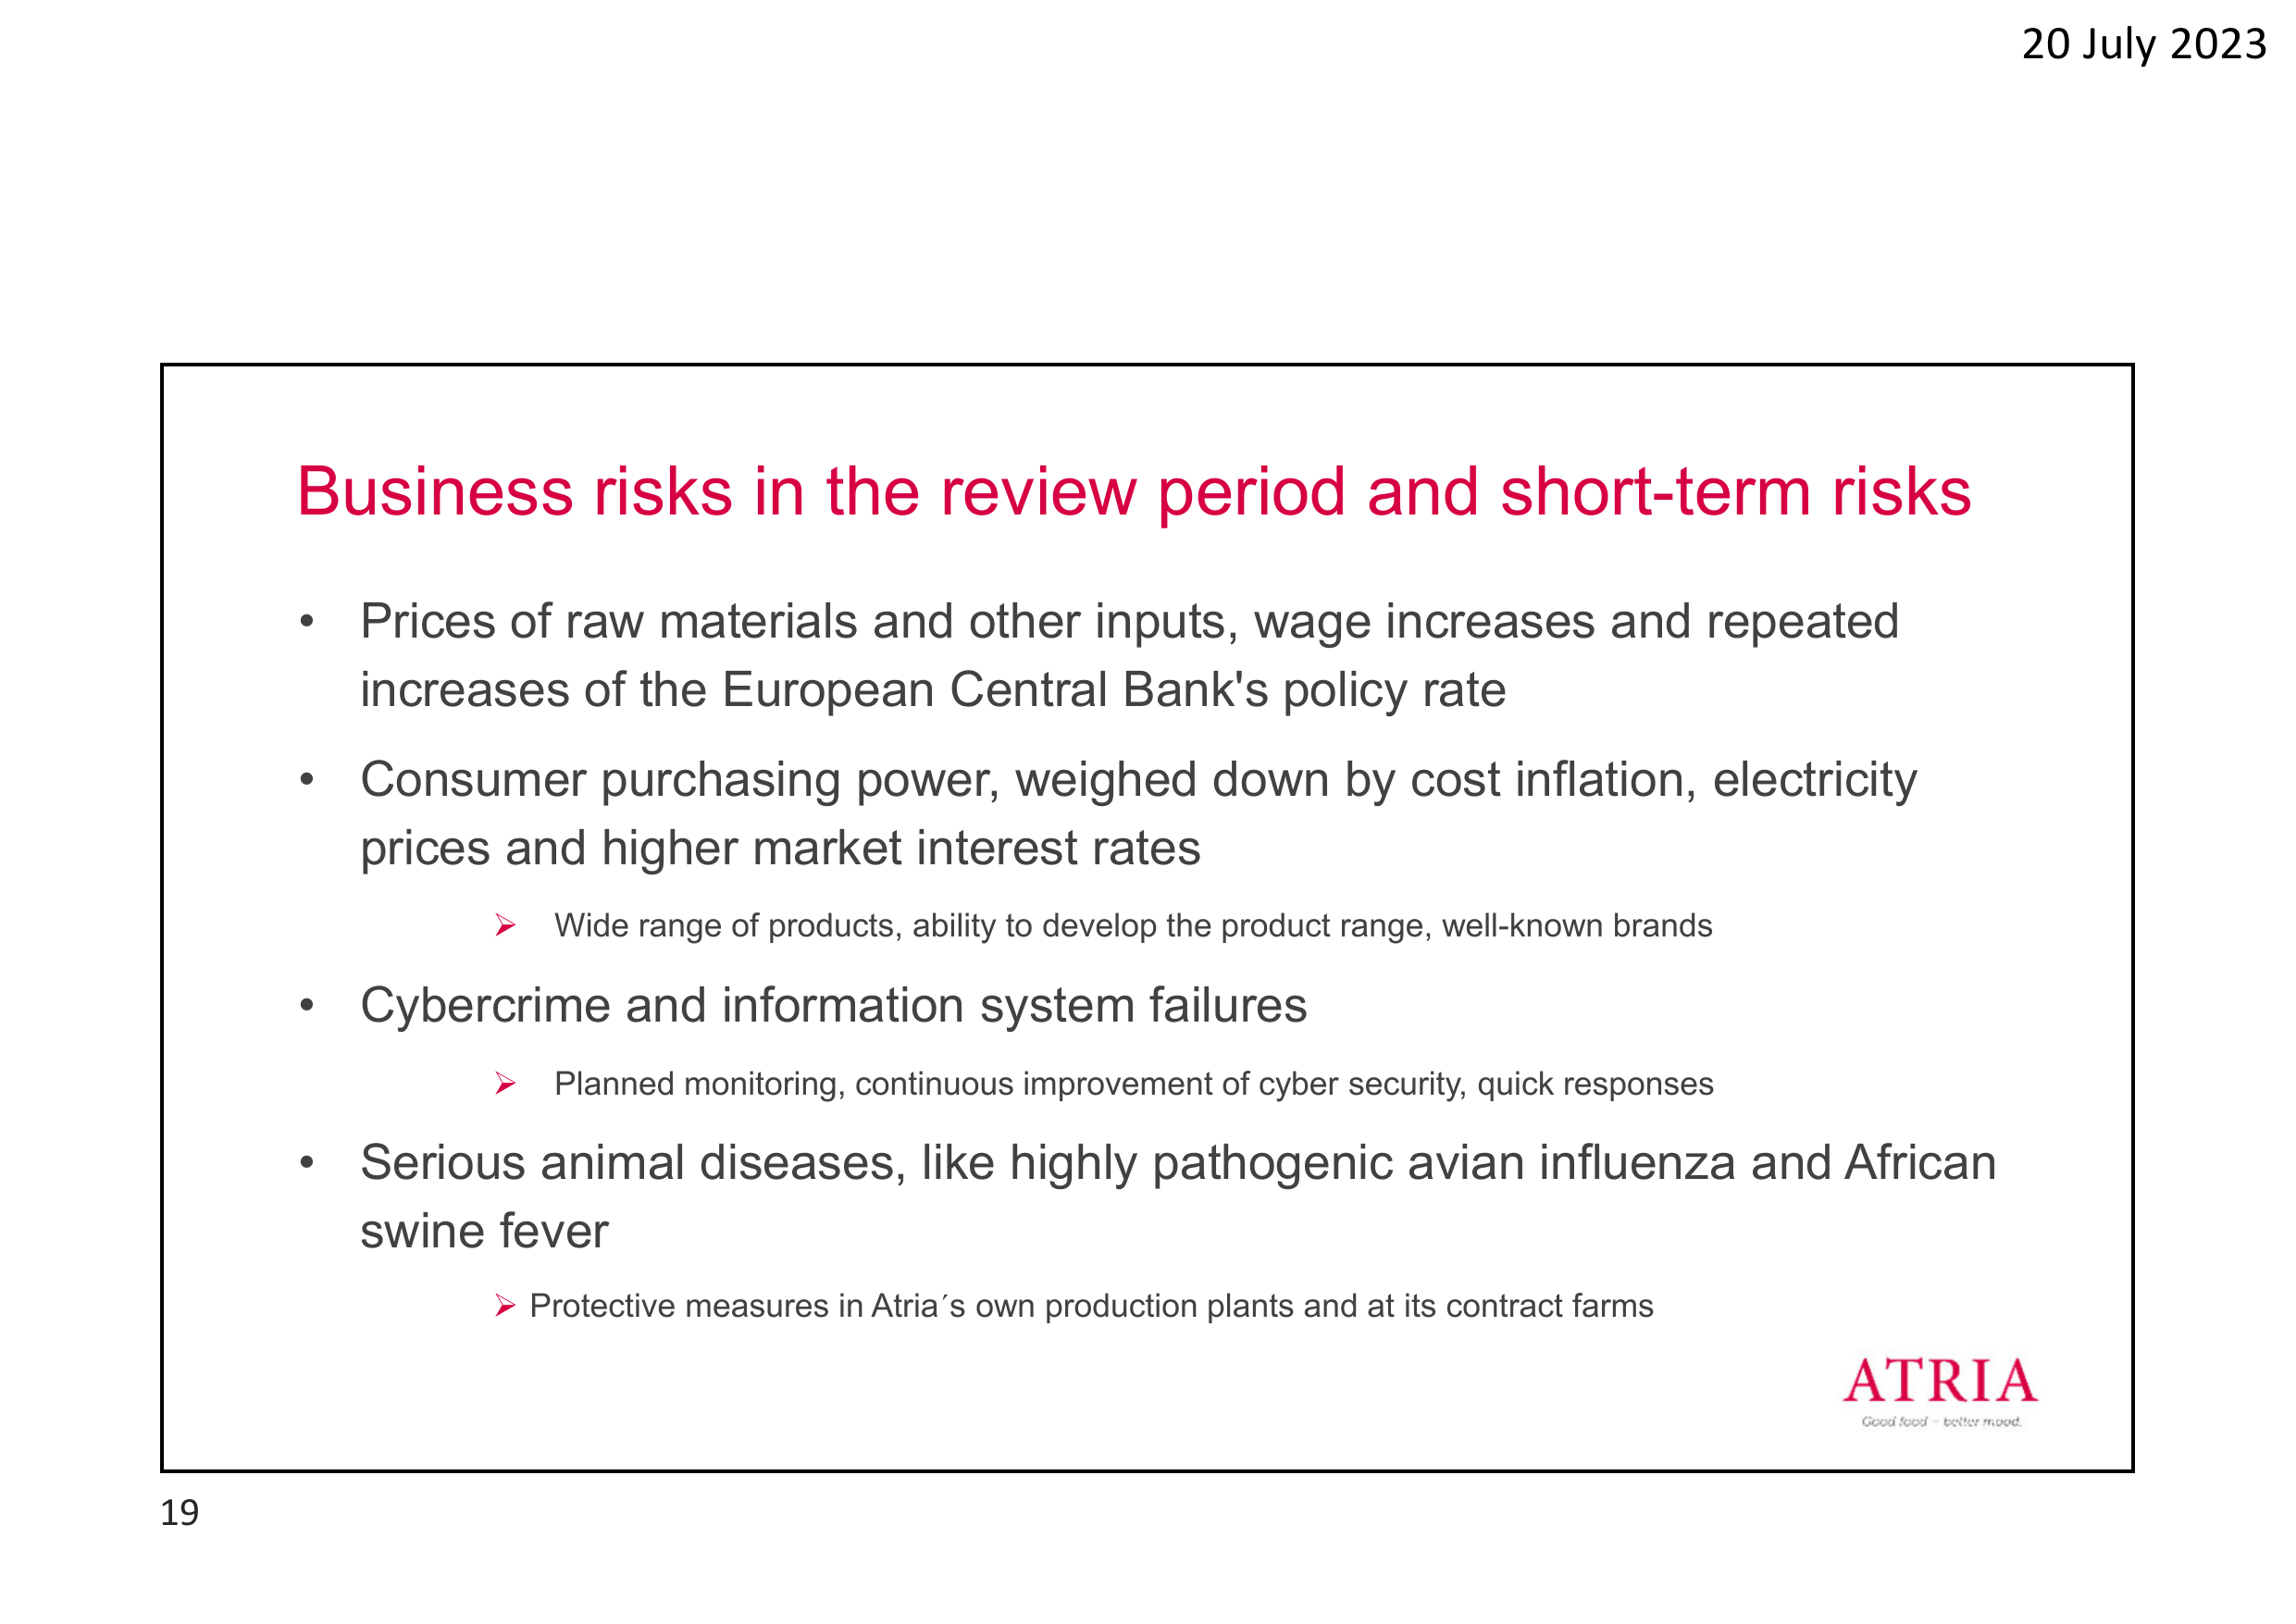 19 

Business risks 